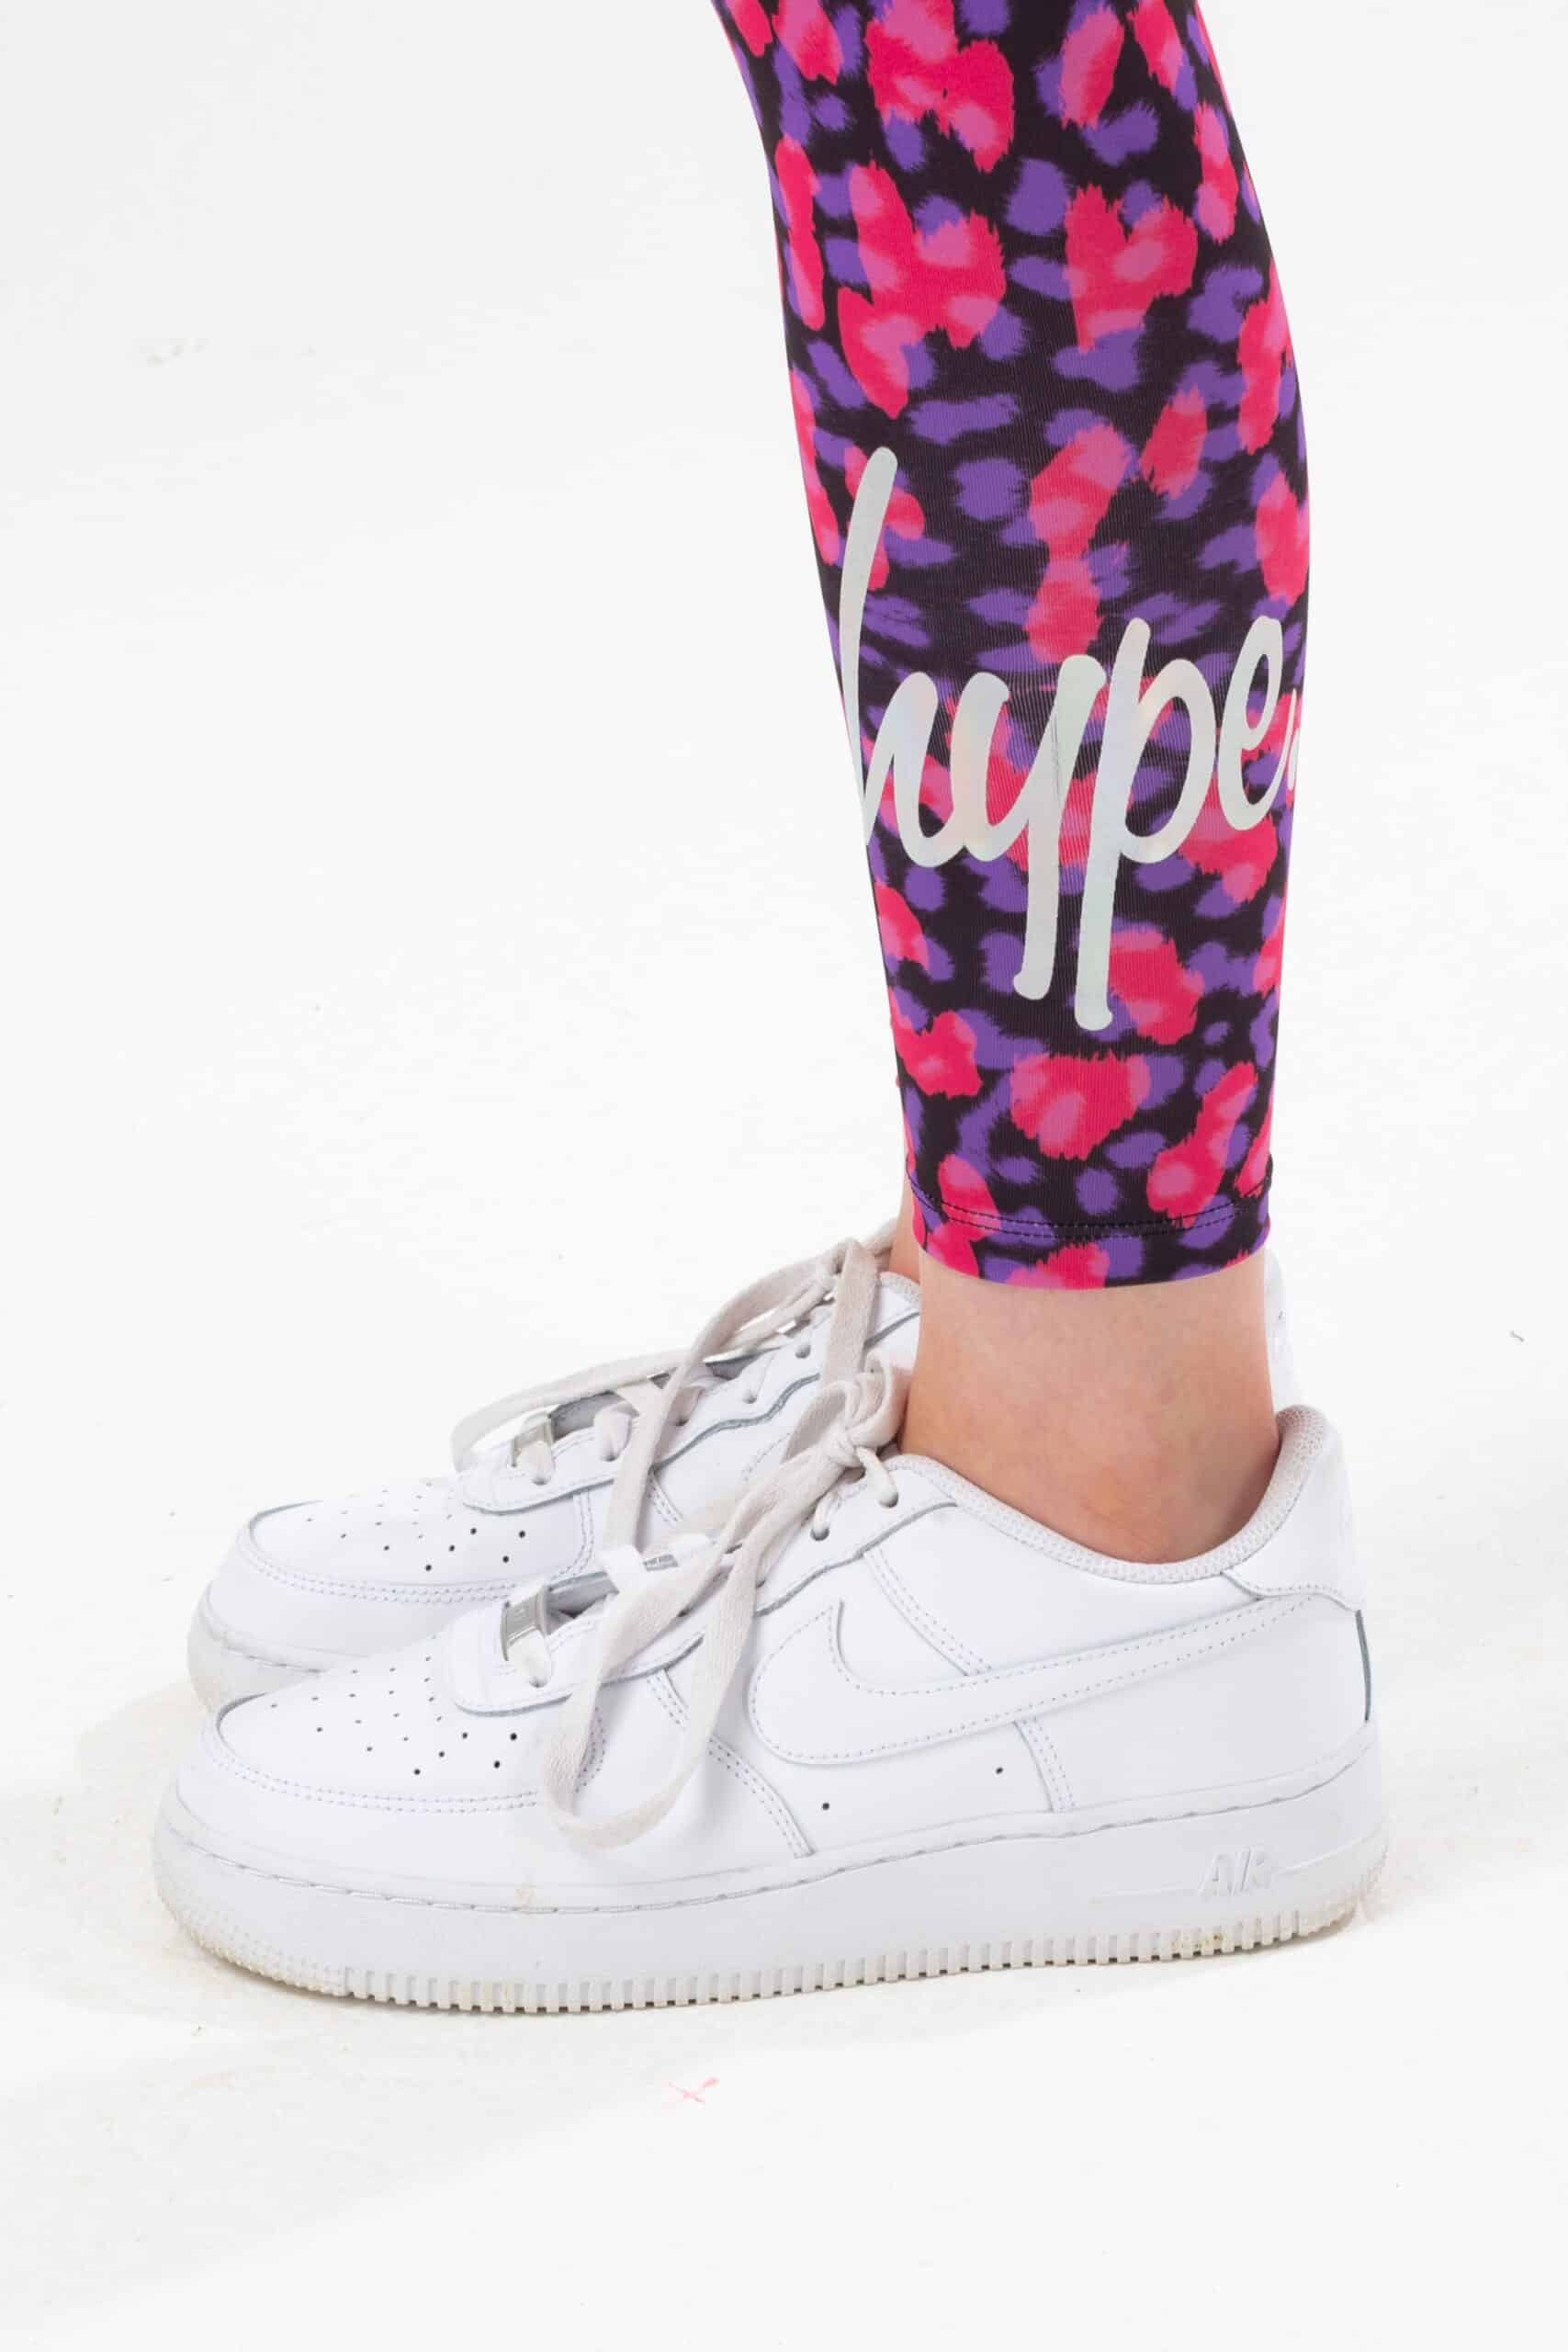 hype girls leopard print leggings close up of logo